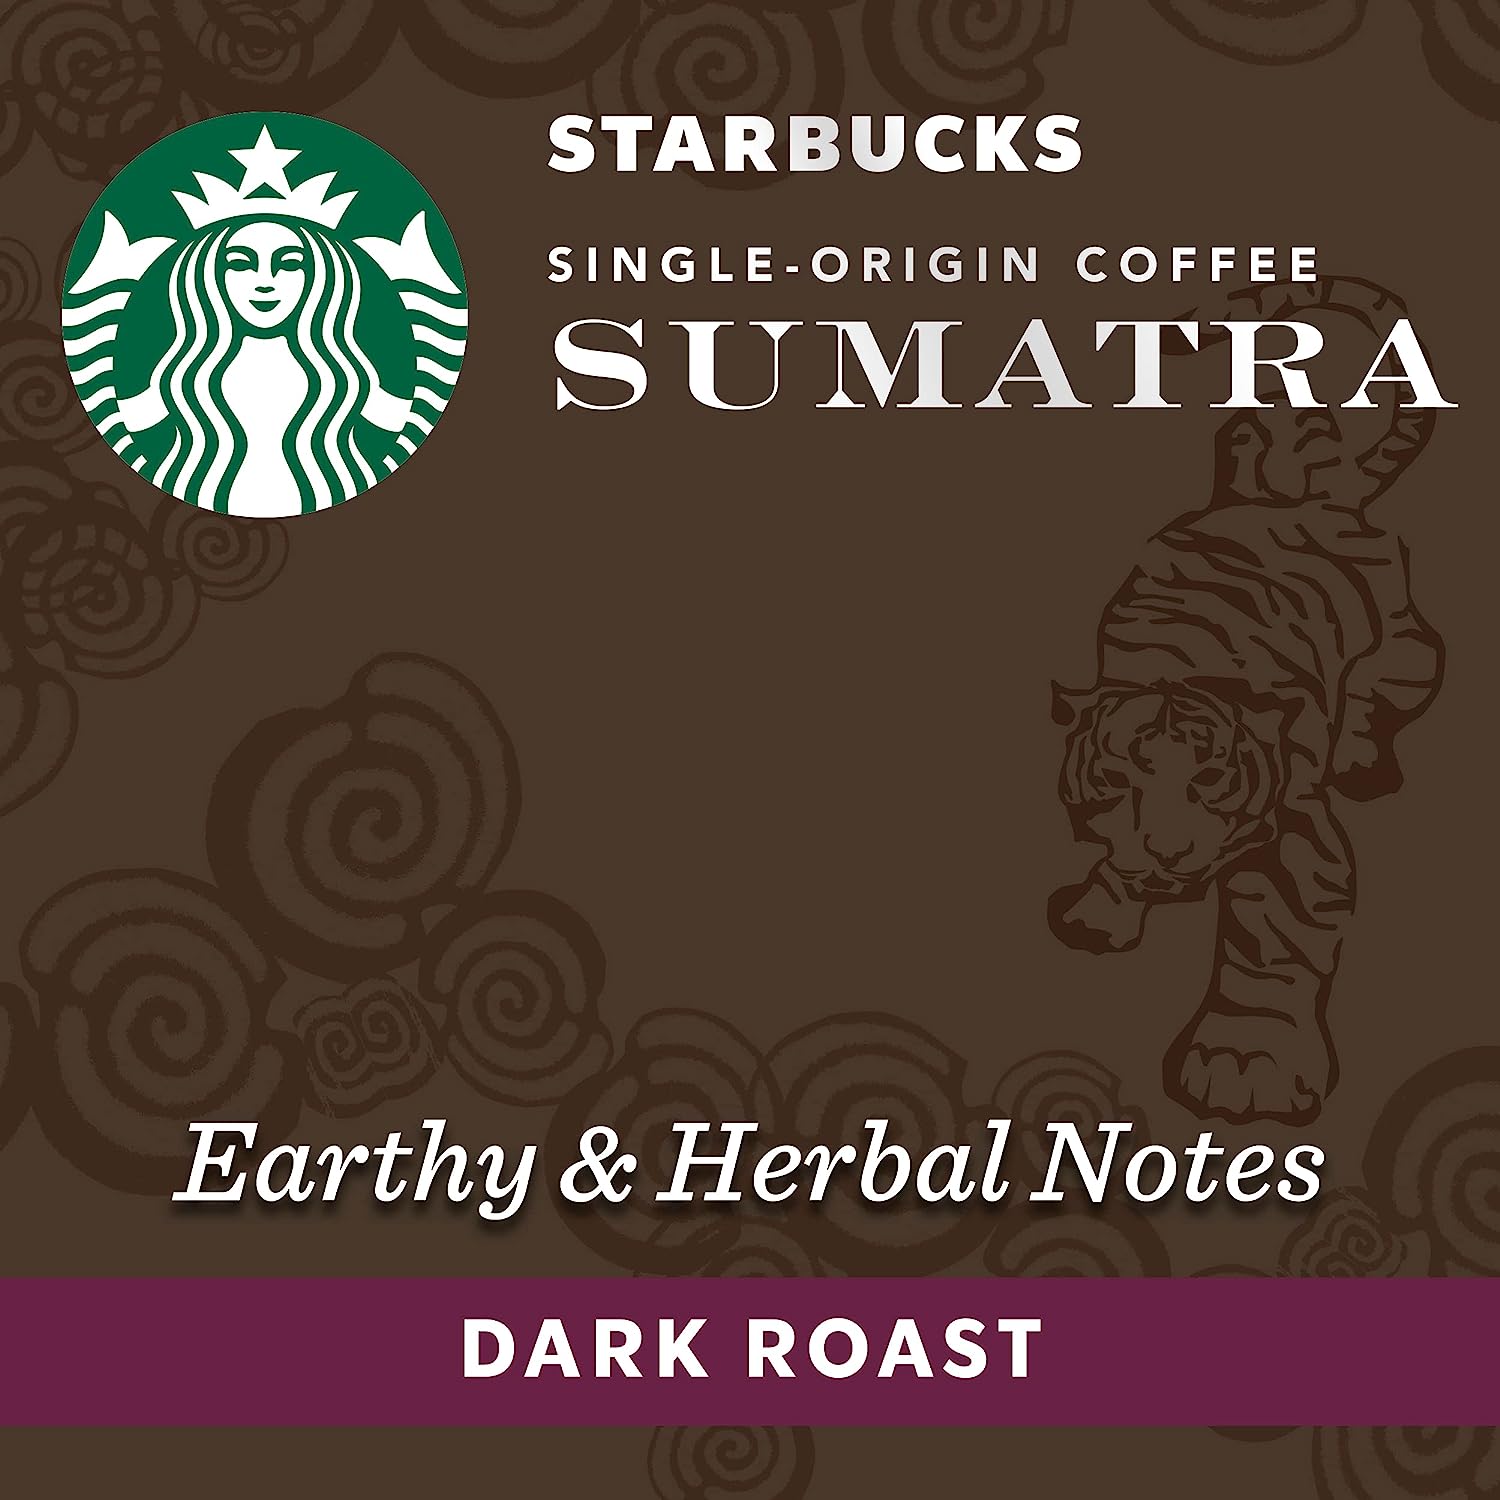 Starbucks by Nespresso Dark Roast Espresso (50-count single serve capsules,  compatible with Nespresso Vertuo Line System)